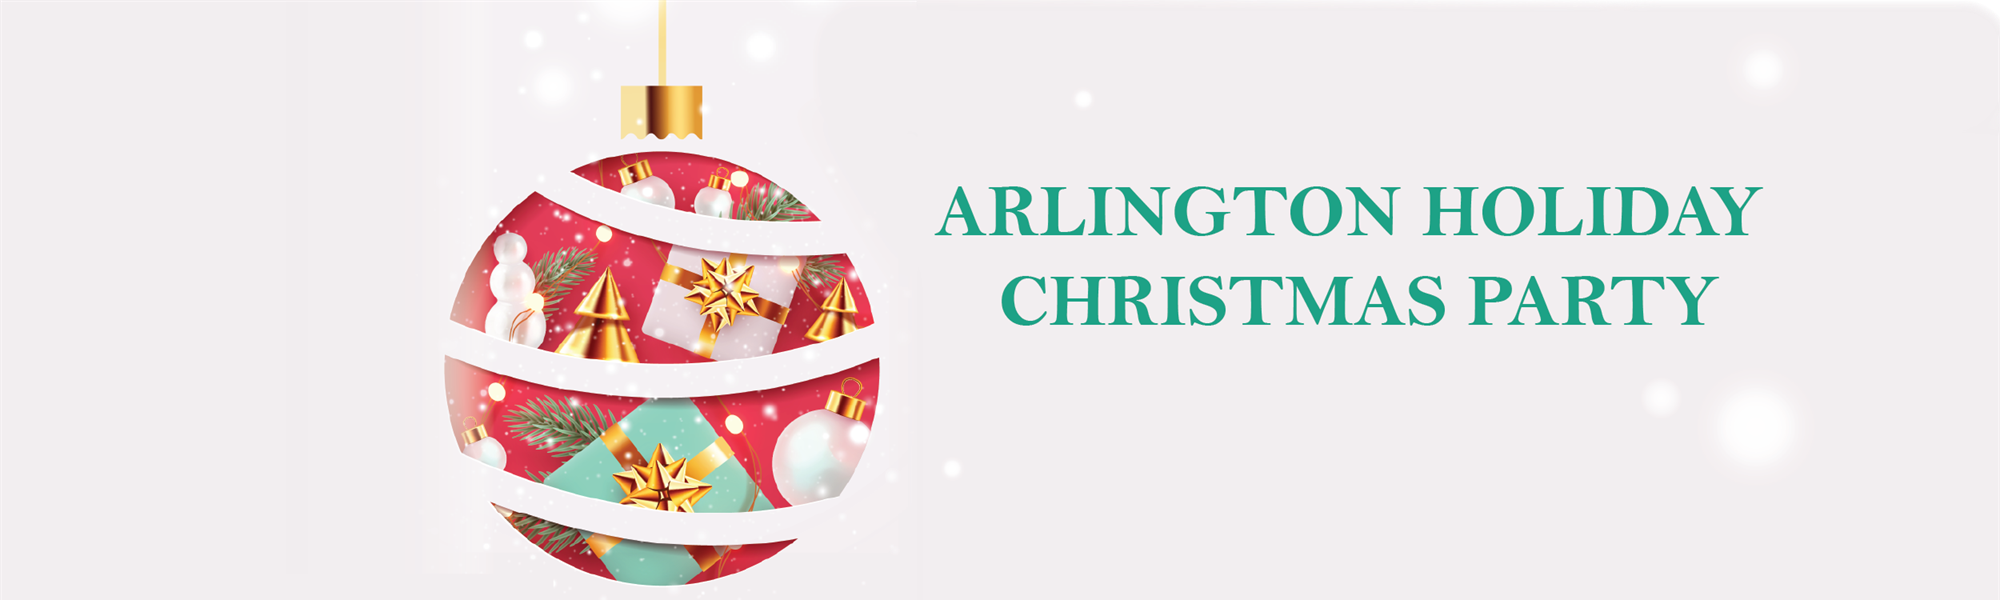 Arlington Holiday Christmas Party